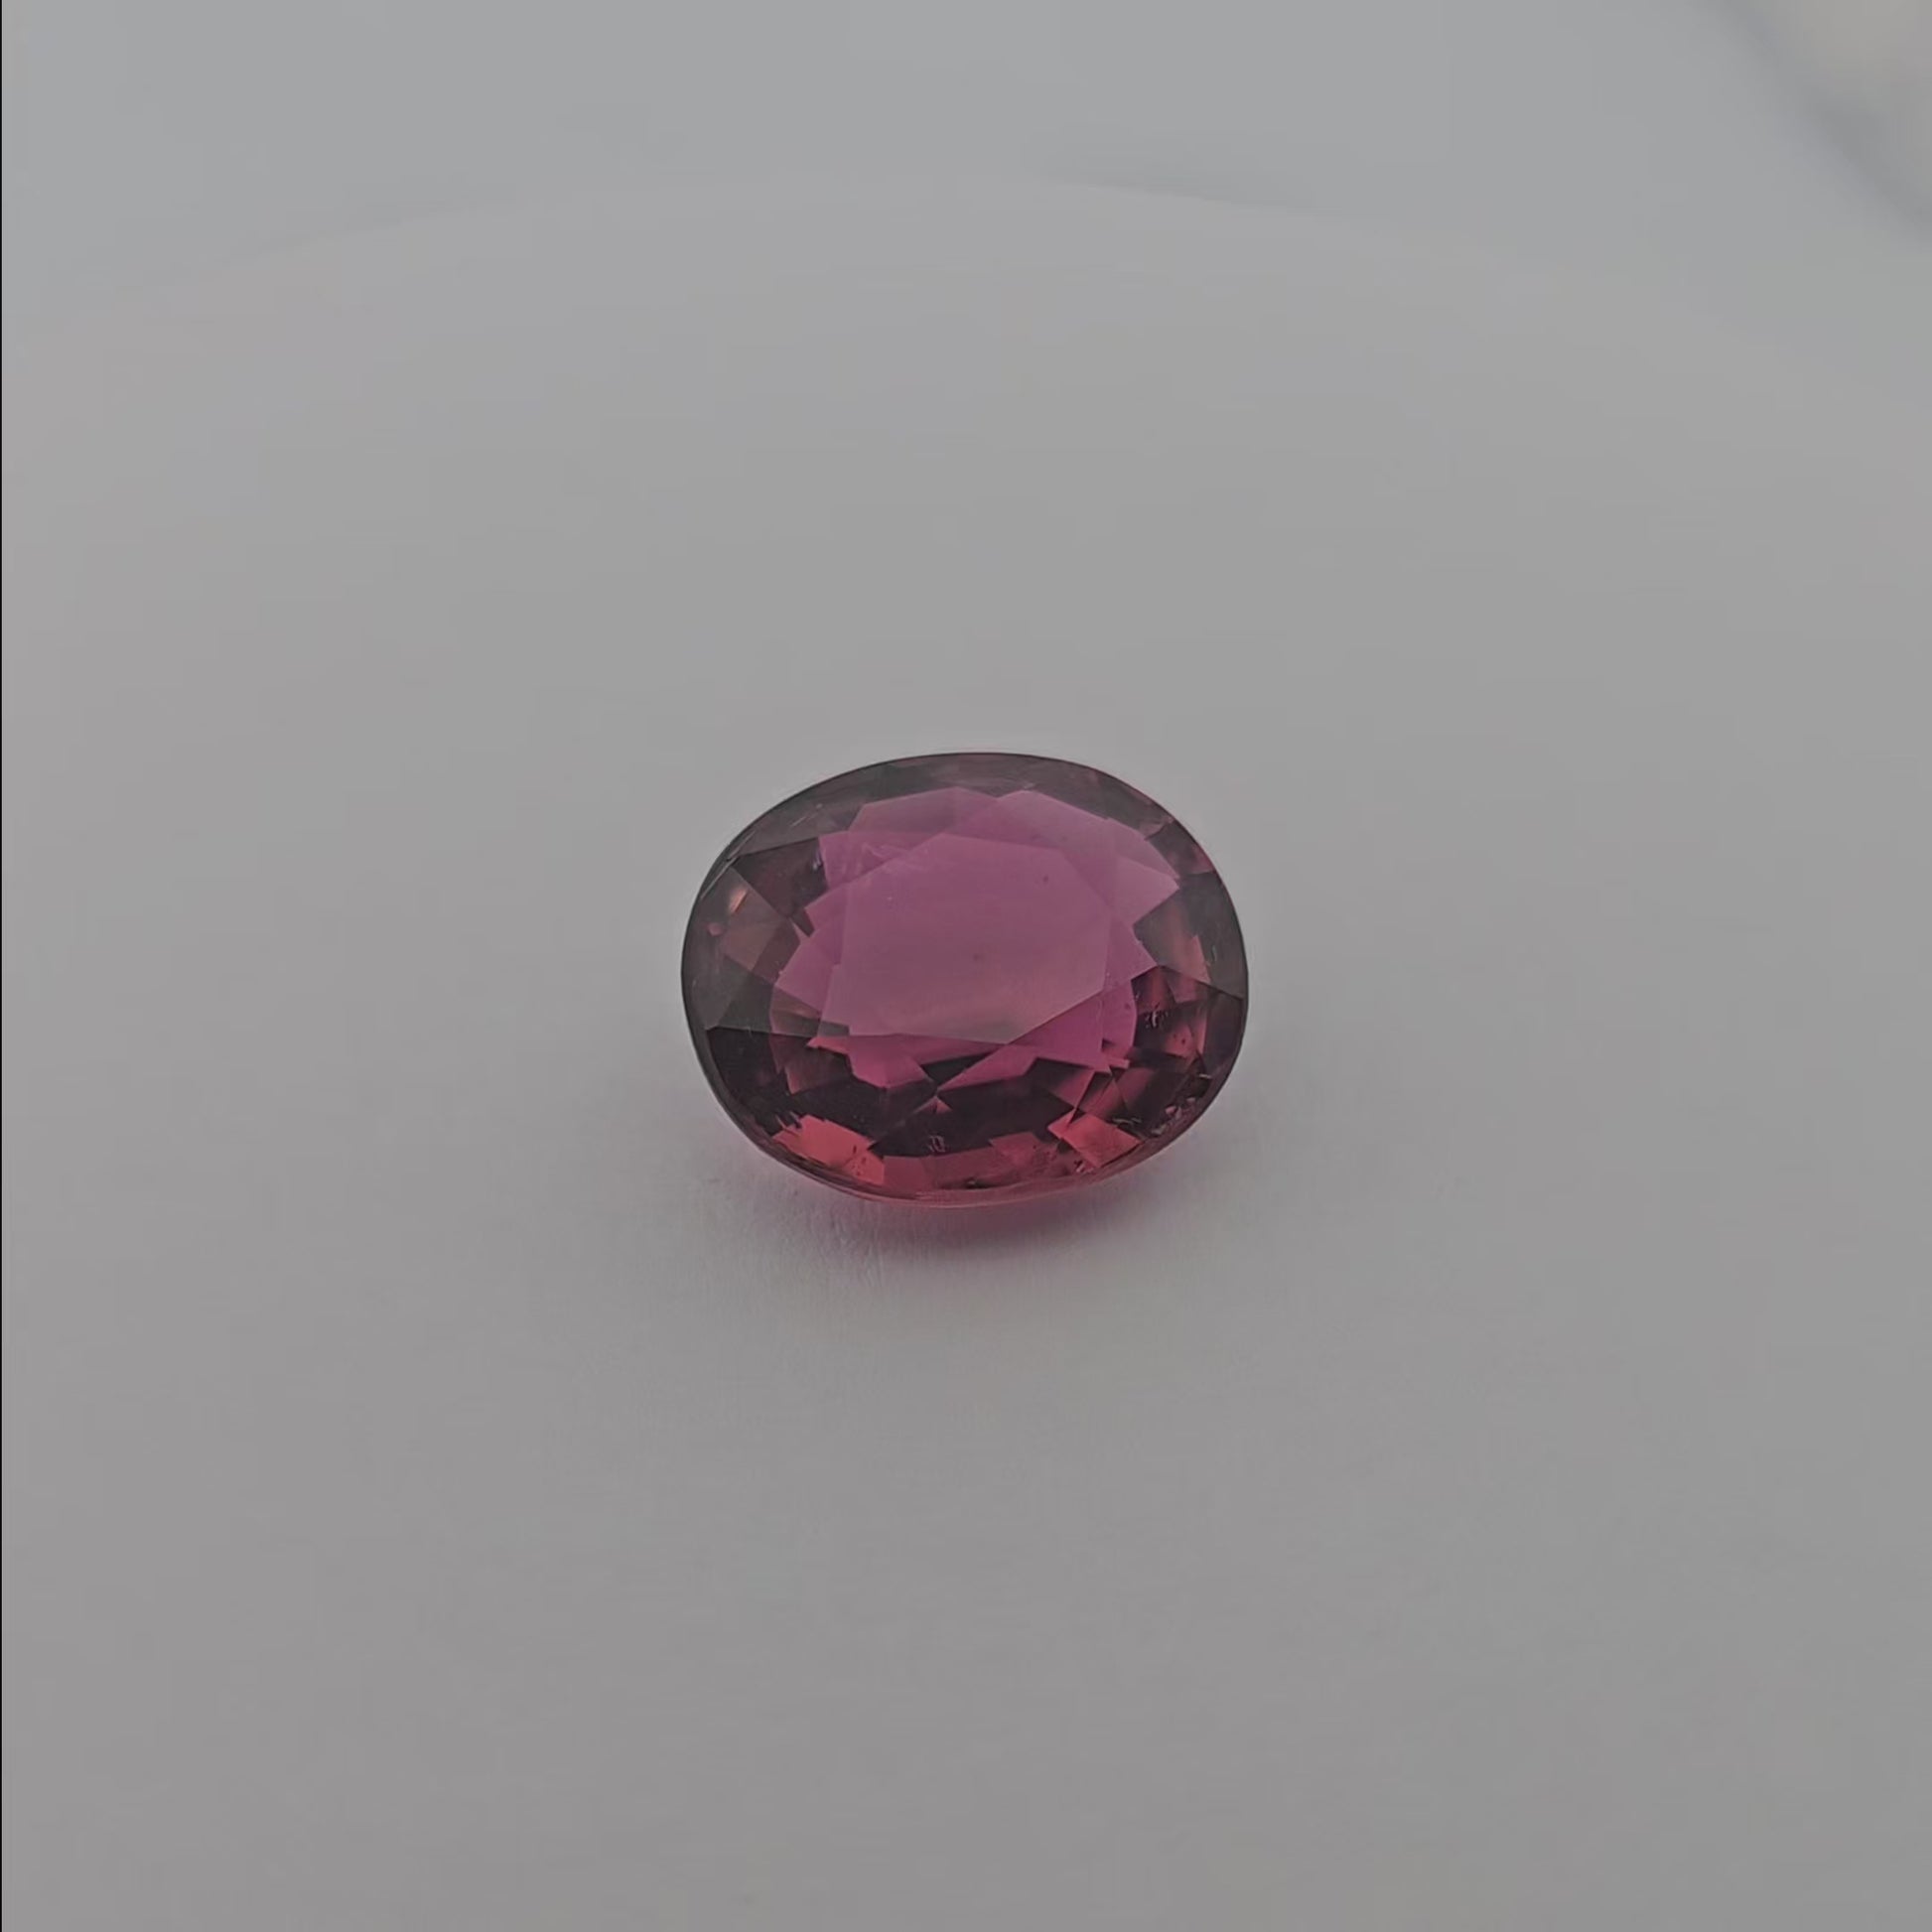 loose Natural Pink Tourmaline Stone 8.36 Carats Oval Shape (14 x 12  mm)